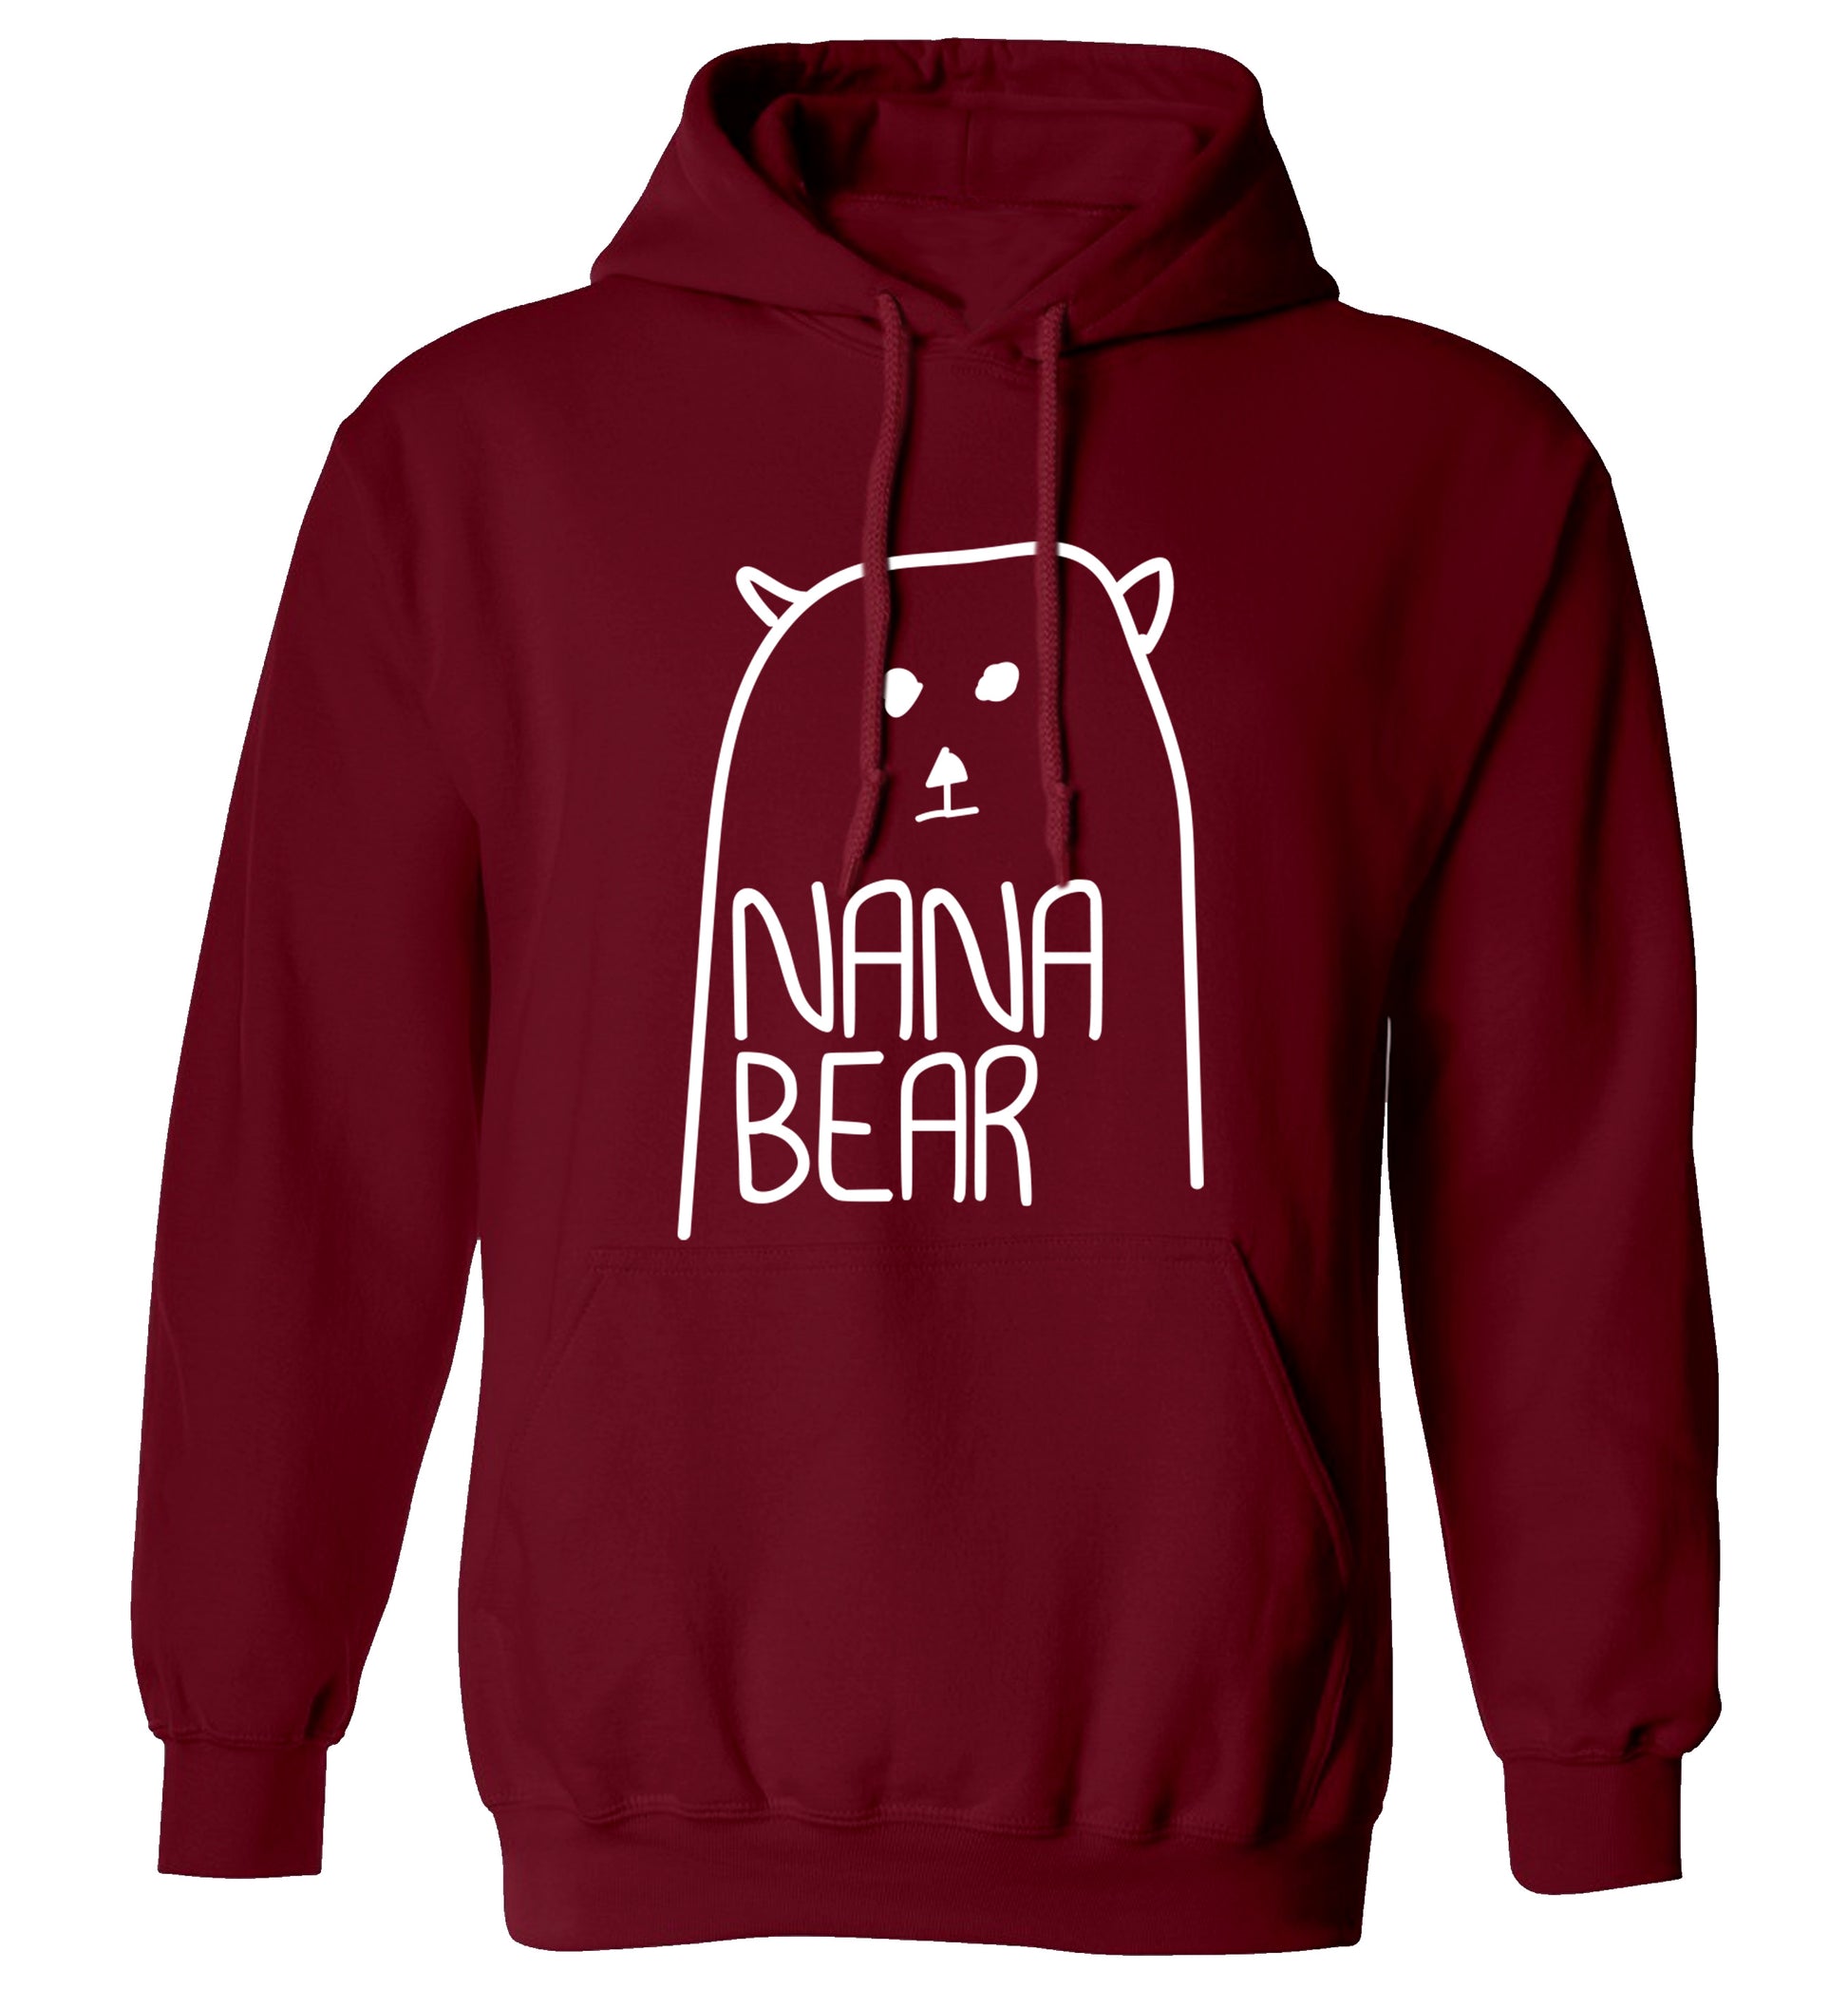 Nana bear adults unisex maroon hoodie 2XL